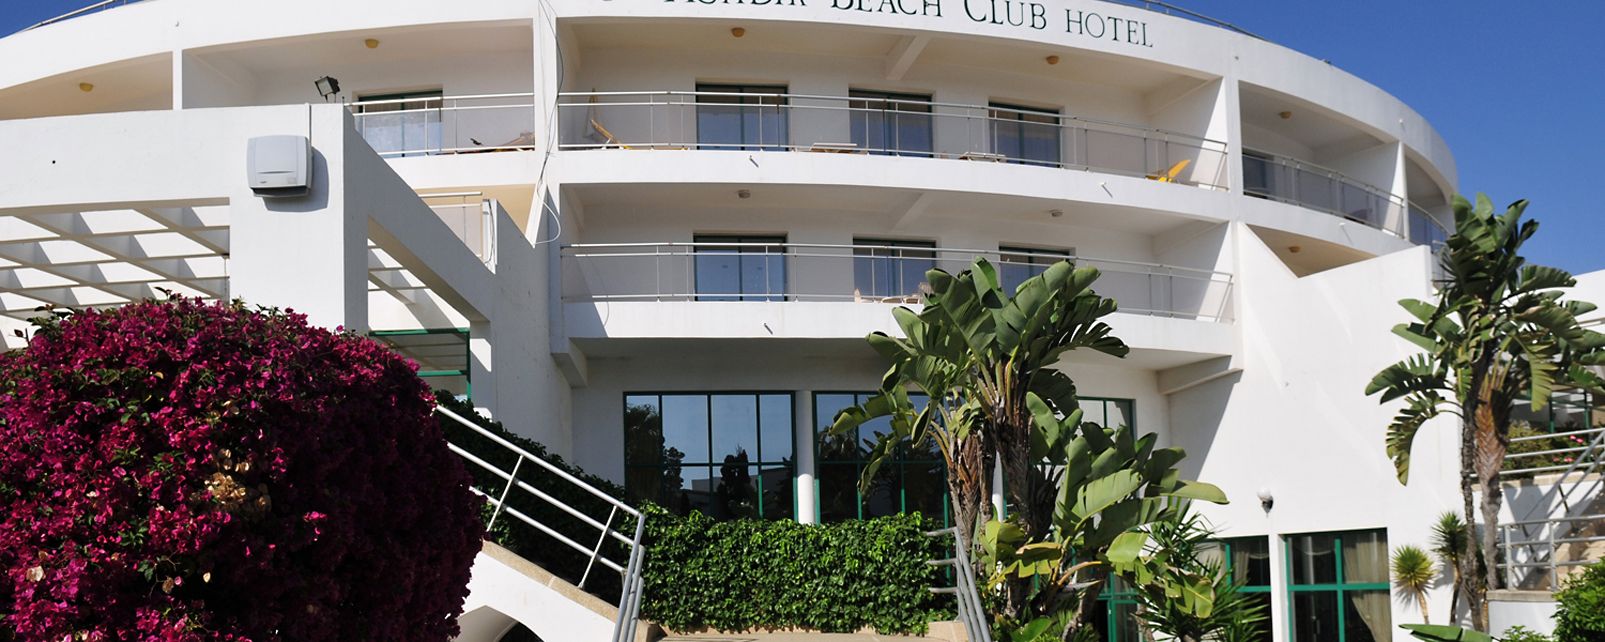 Hotel Agadir Beach